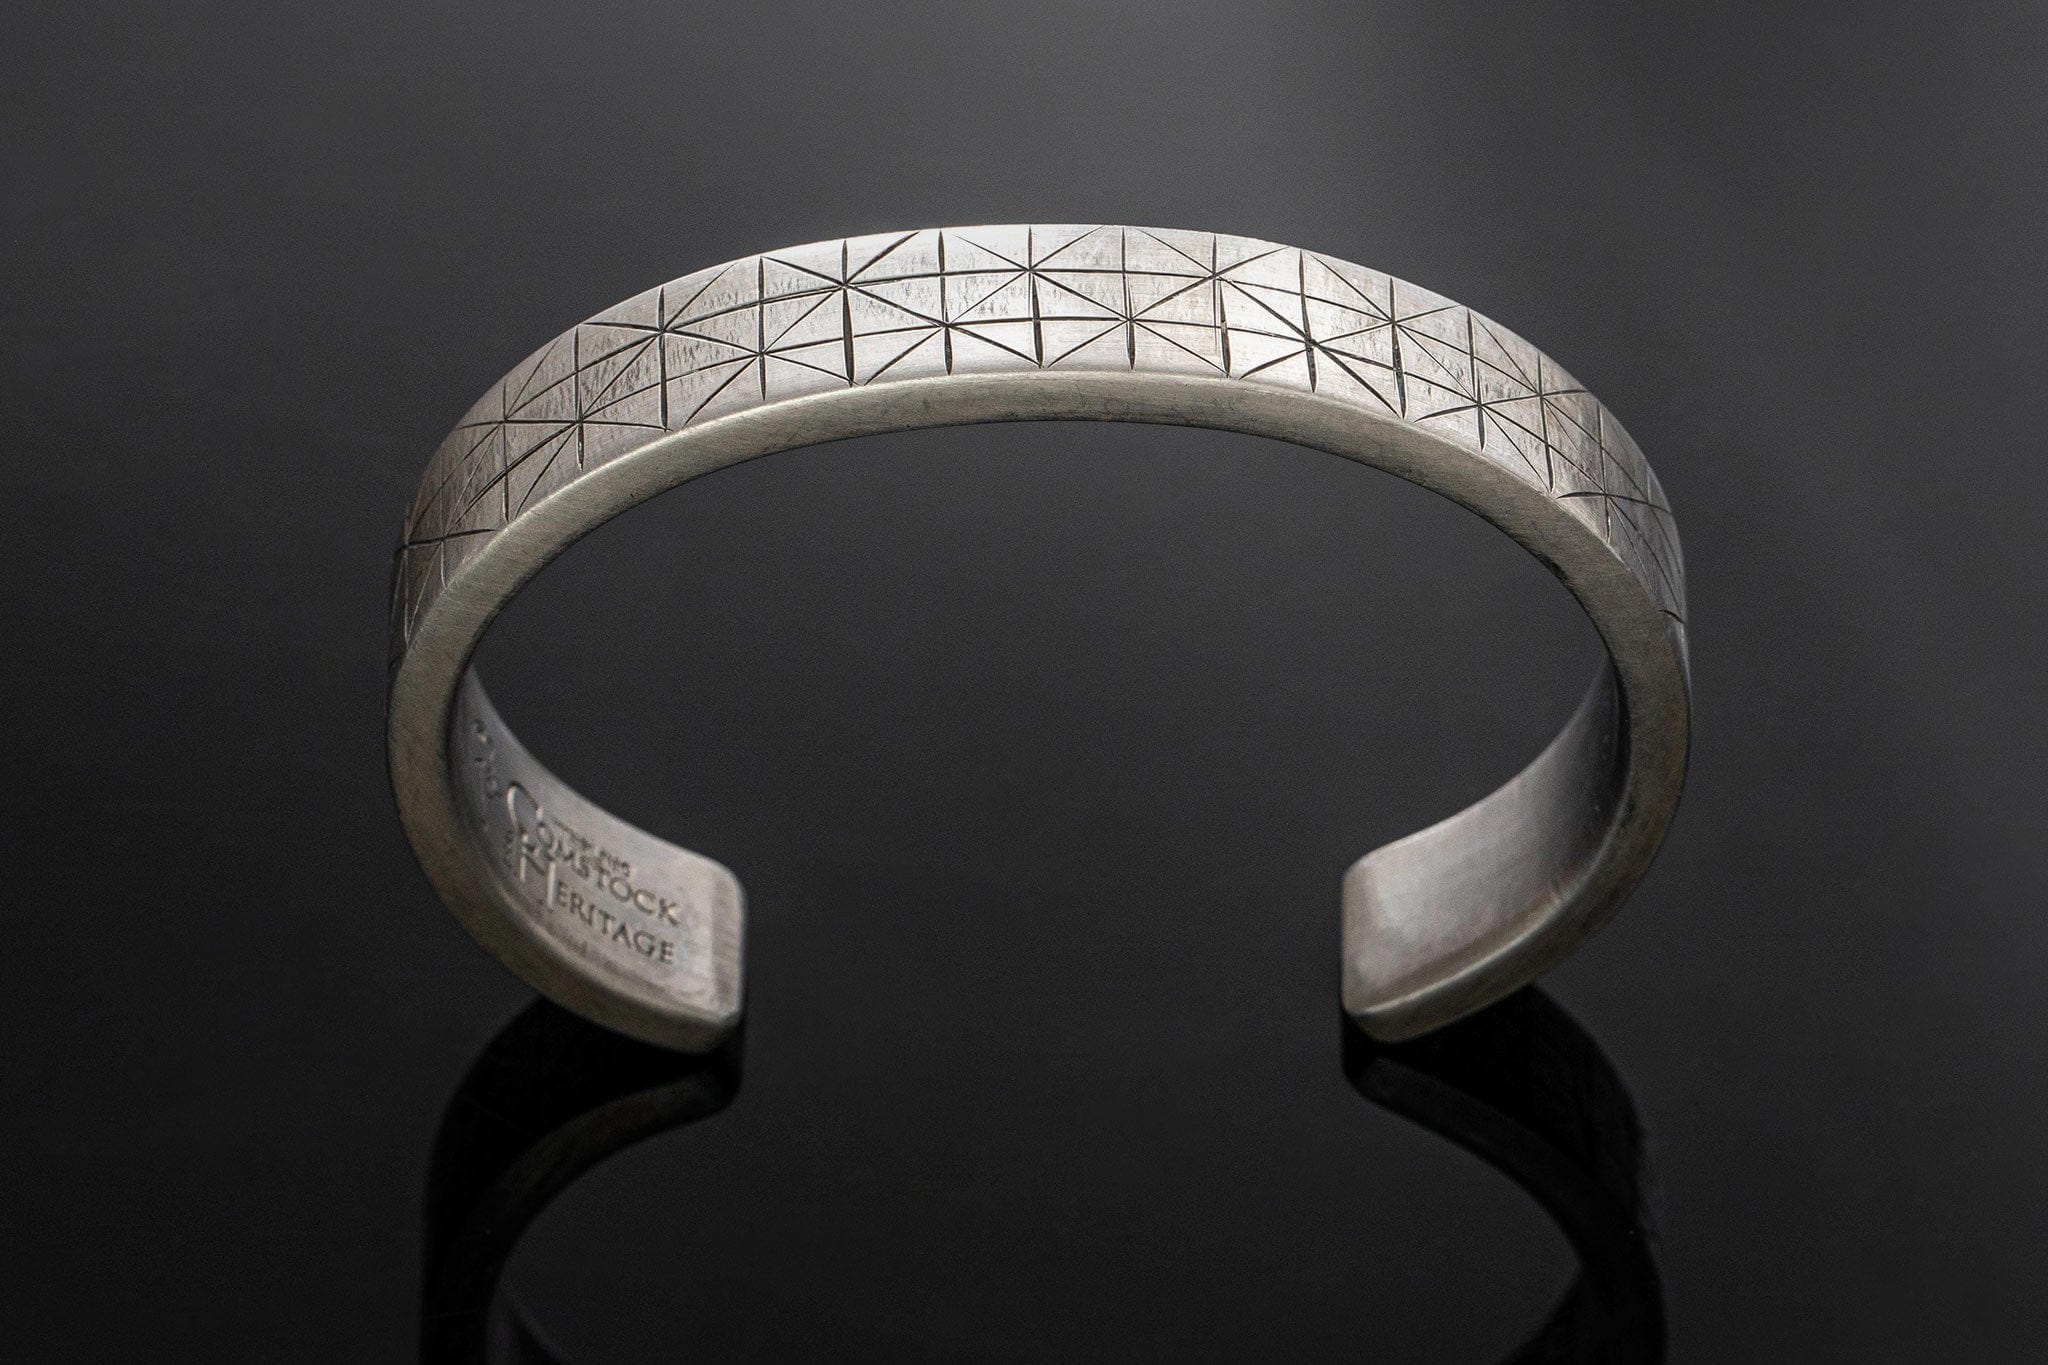 CLARA ANTI-TARNISH 92.5 STERLING SILVER BRACELET 8 INCH 15 GM GIFT FOR MEN  & BOYS - Minar Fashion Jewellery